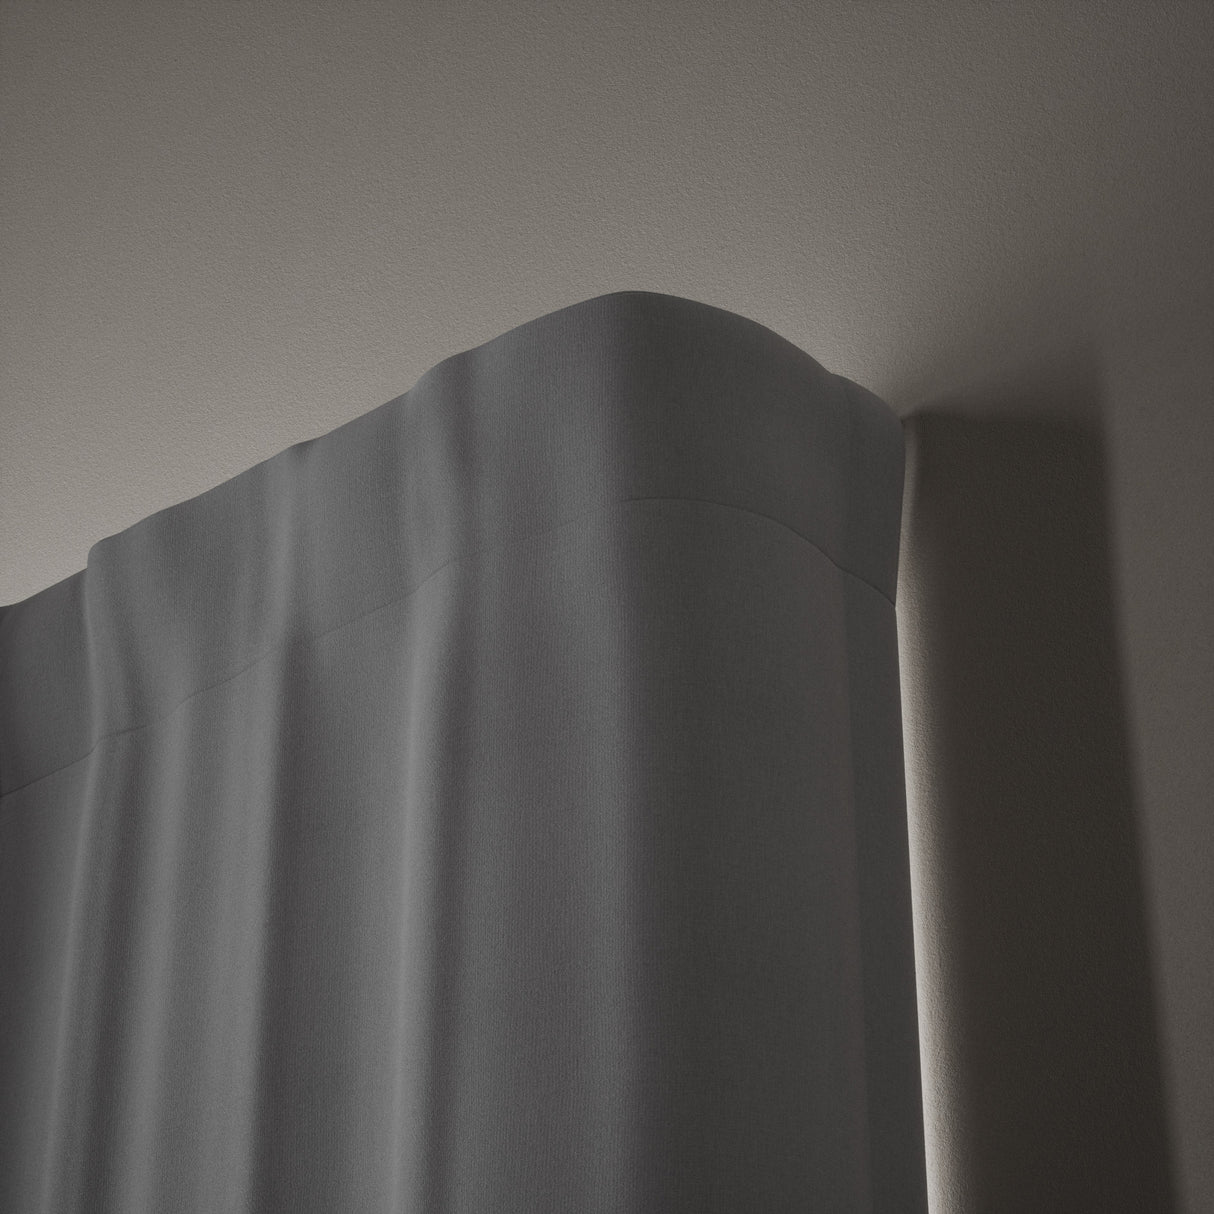 Single Curtain Rods | color: Brass | size: 28-48"(71-122cm) | diameter: 3/4"(1.9cm) | https://vimeo.com/625708370